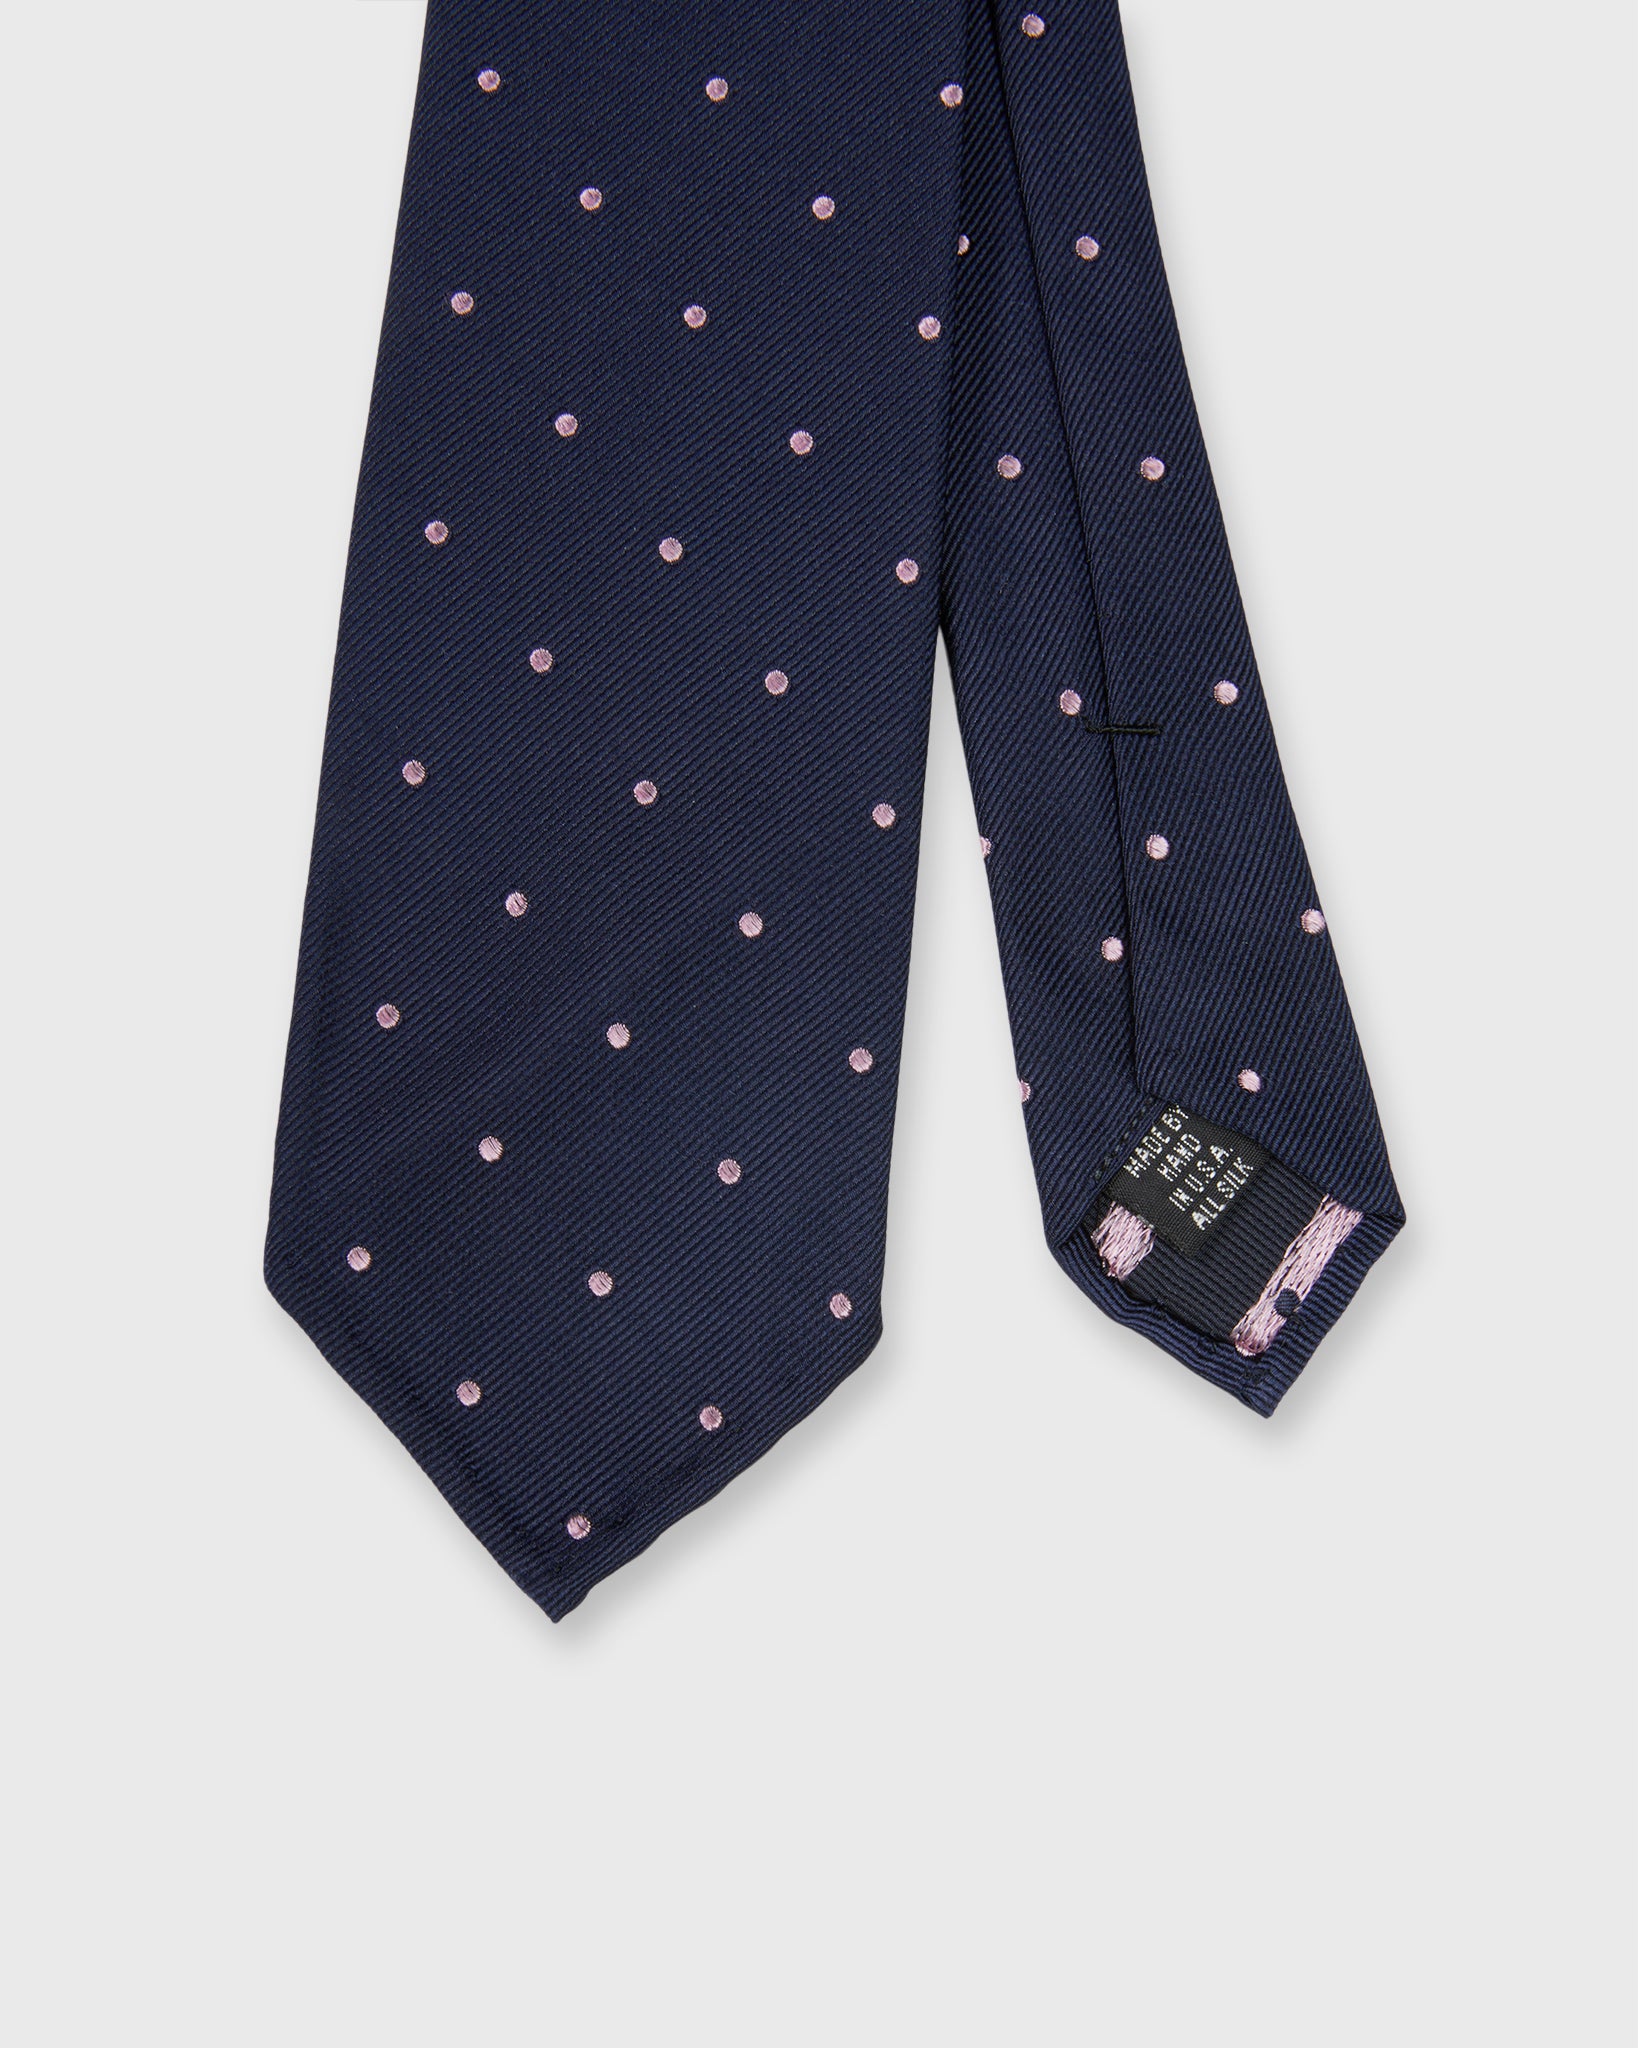 Silk Woven Tie in Navy/Pink Dot